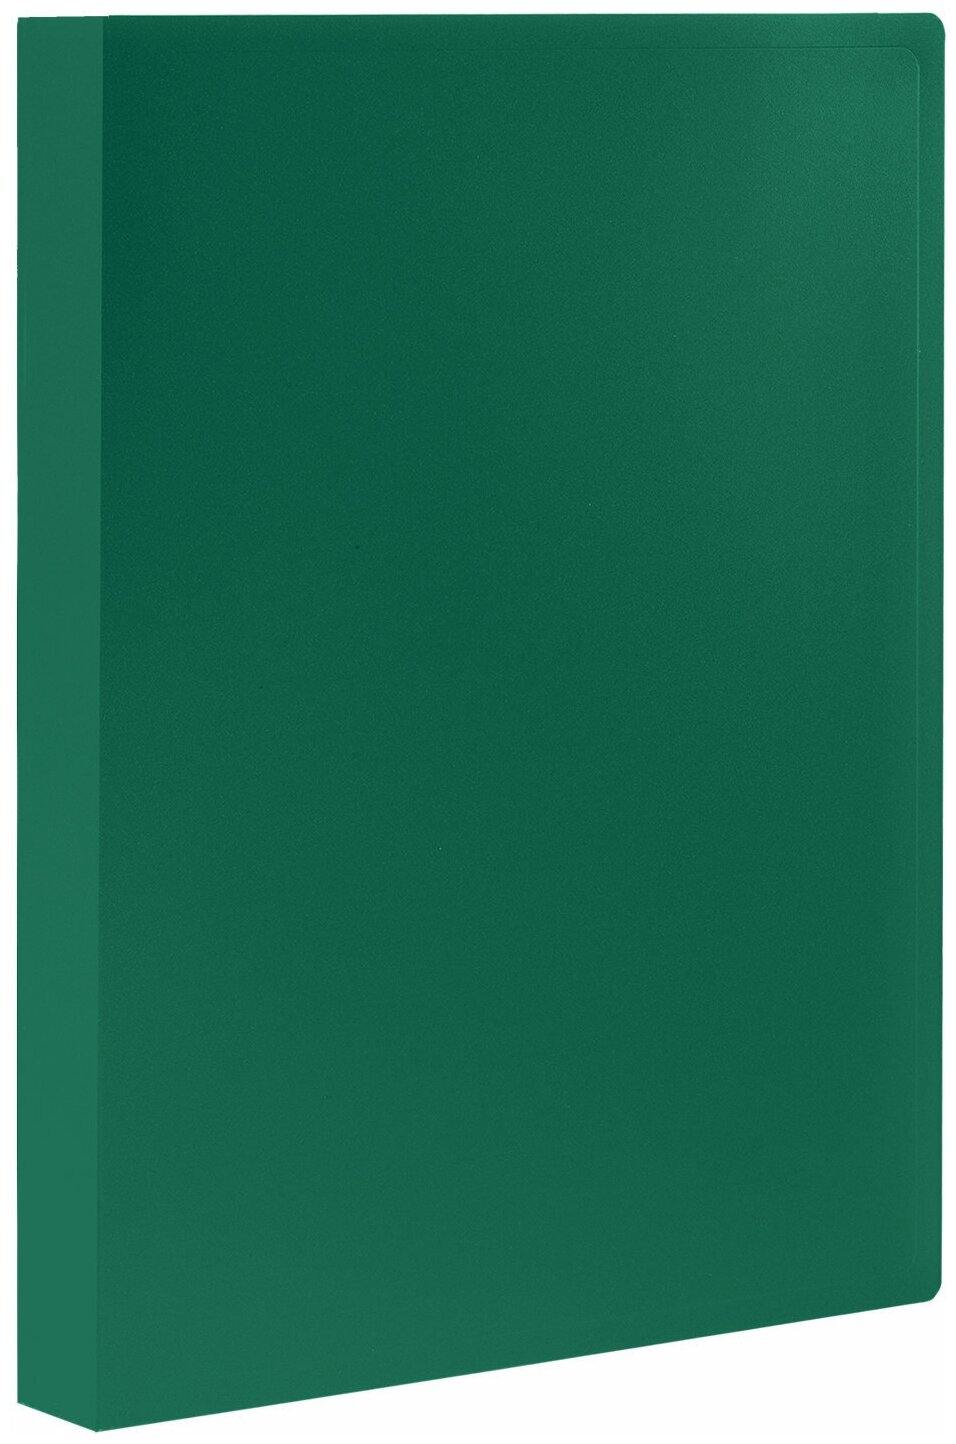 Папка 100 вкладышей STAFF, зеленая, 0,7 мм, 225715